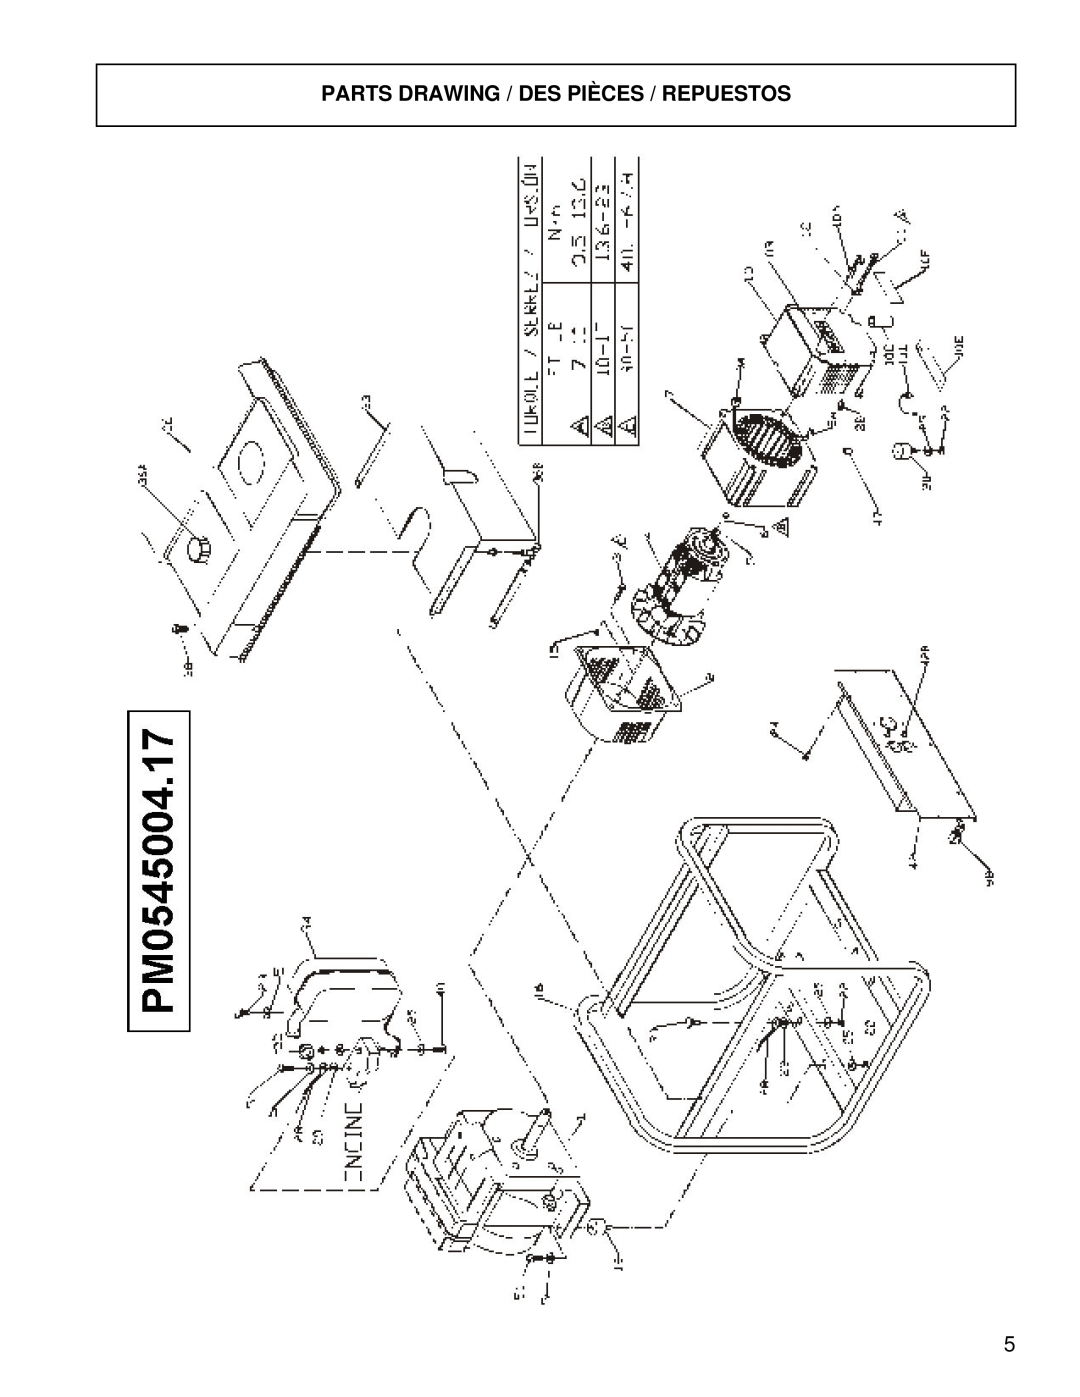 Powermate PM0545004.17 manual Parts Drawing / Des Pièces / Repuestos 